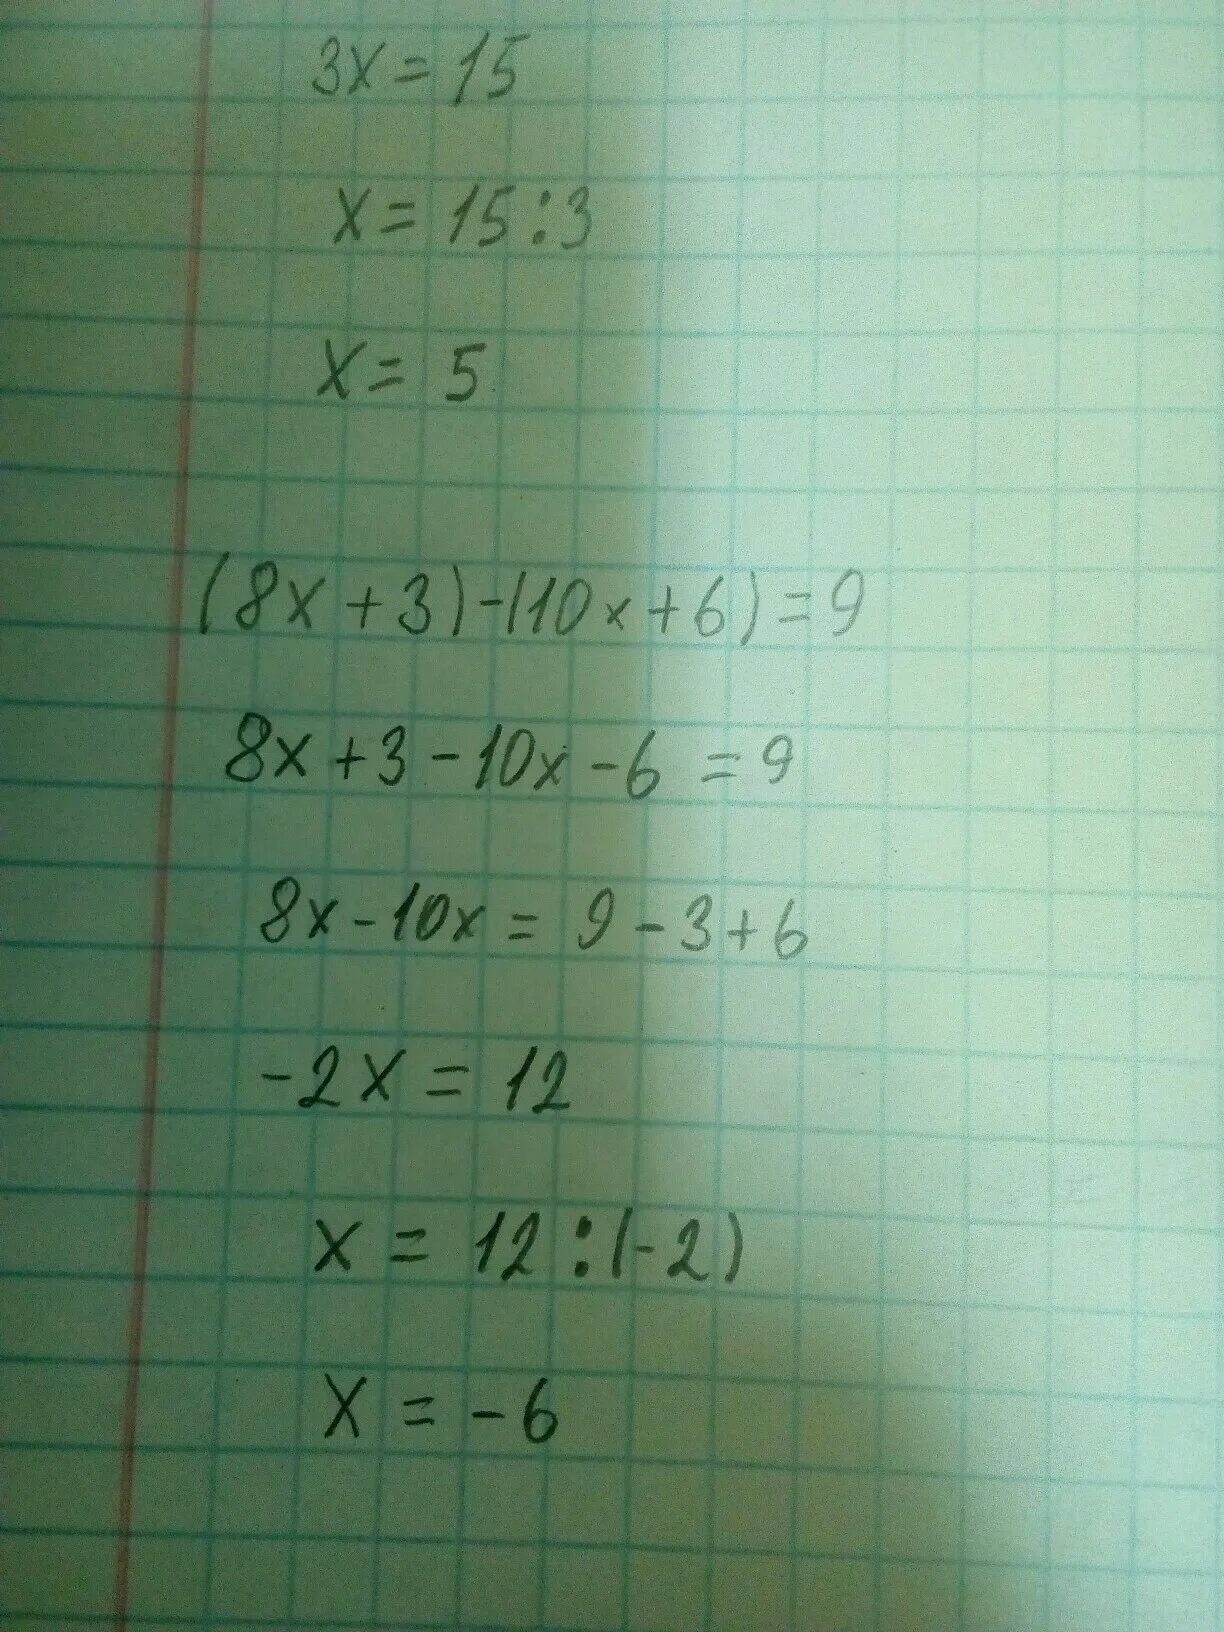 6x 10 8 0. (10-X)(10+X). (8x+3)-(10x+6)=9. (2x-10)-(3x-4)=6. 4x-10=x+8 ответ.